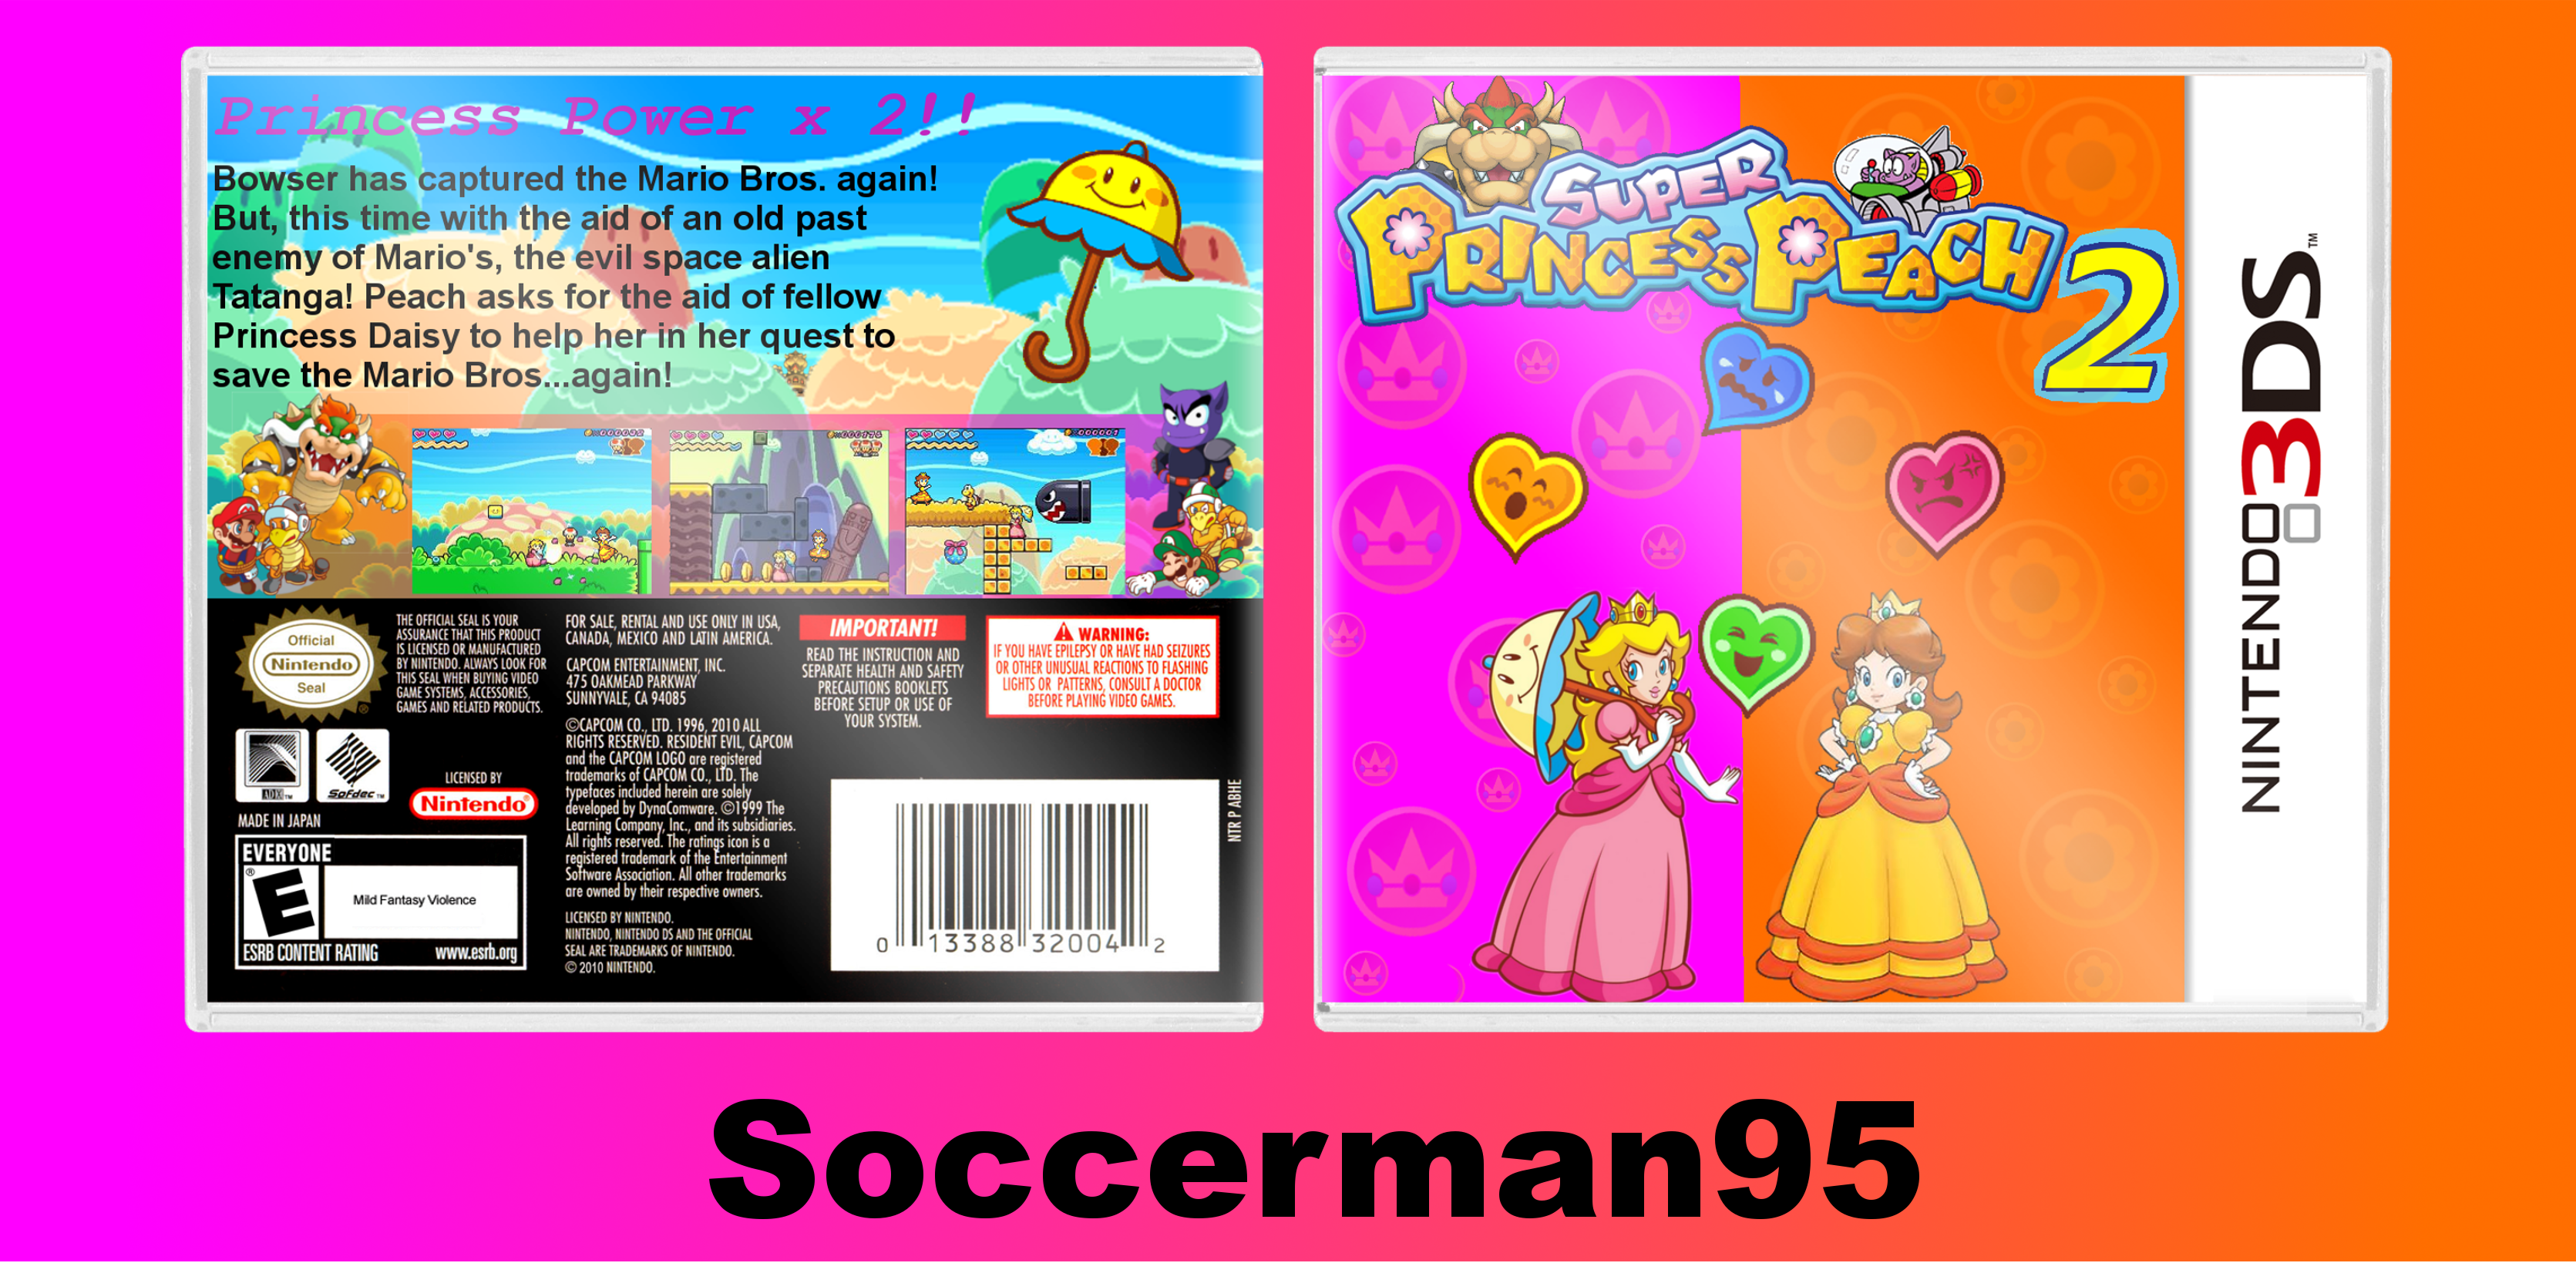 Super Princess Peach 2 box cover